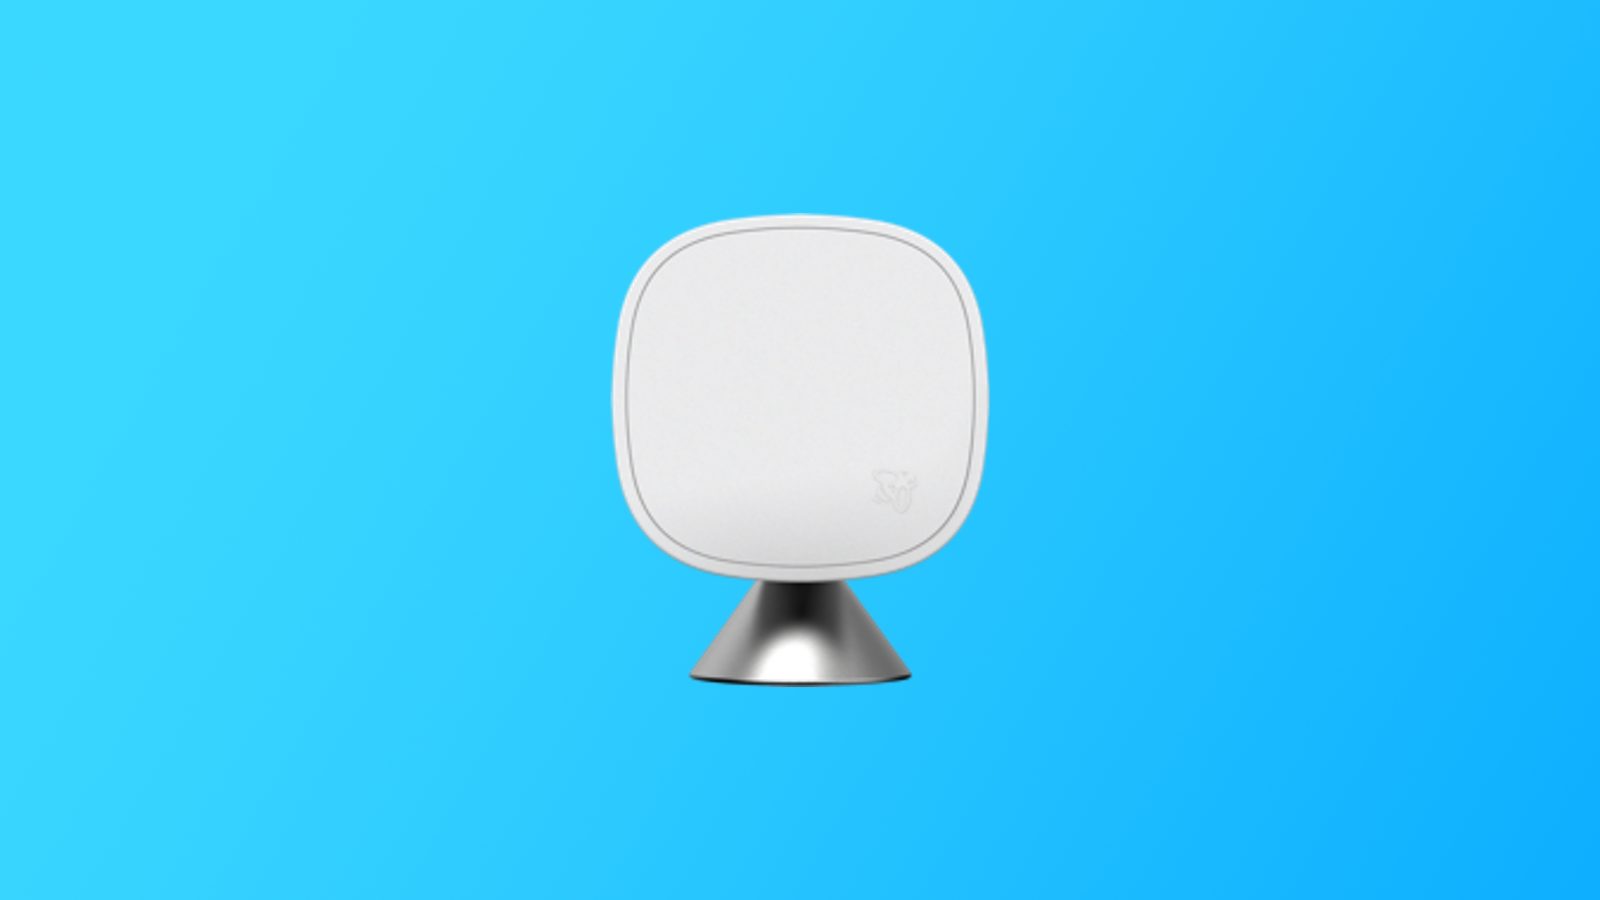 Uping Ecobee4 Homekit Thermostat To Feature Premium Design